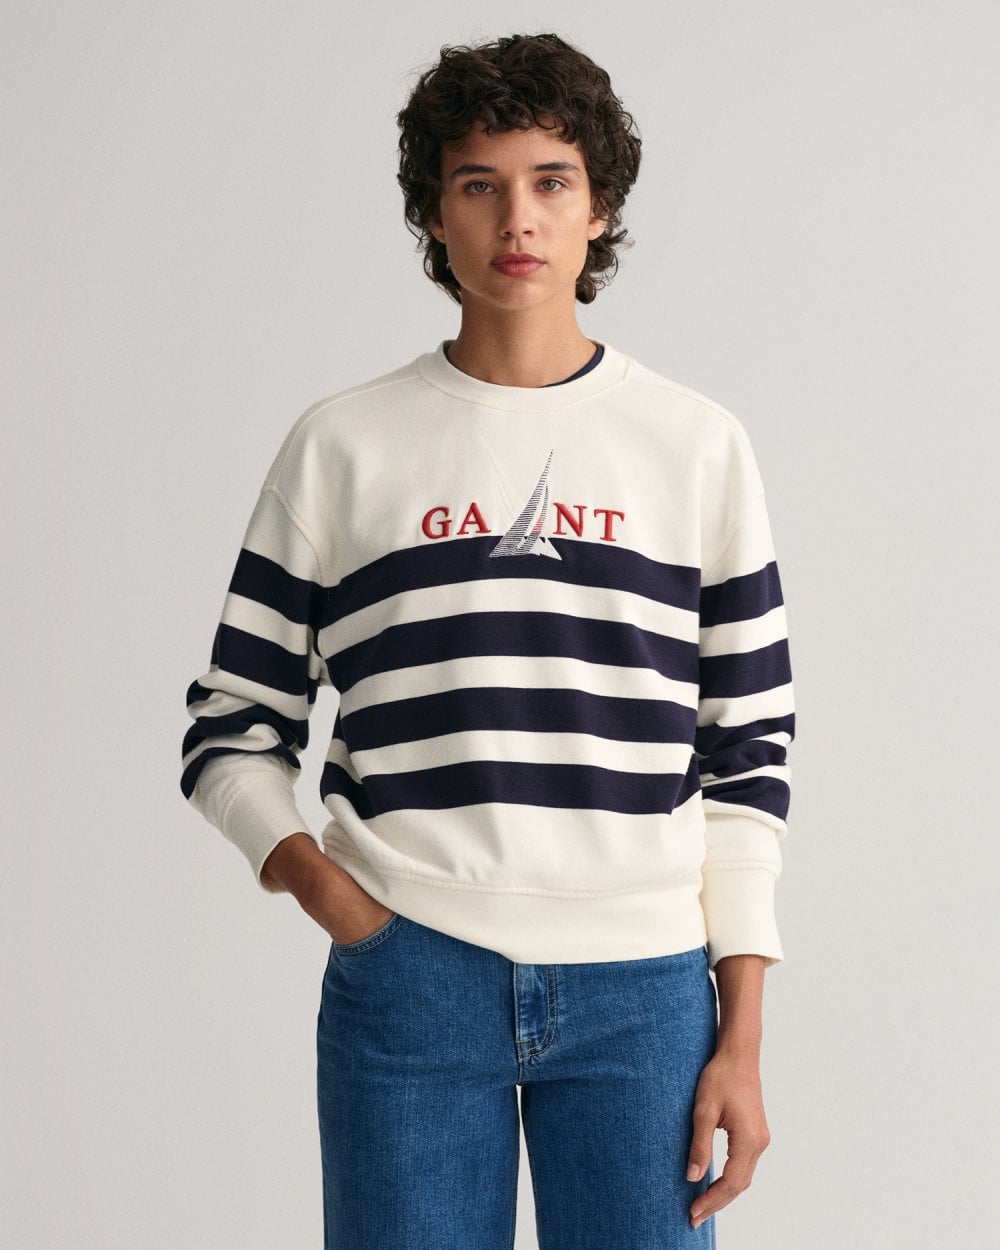 Sail Graphic Striped Crew Neck Sweatshirt